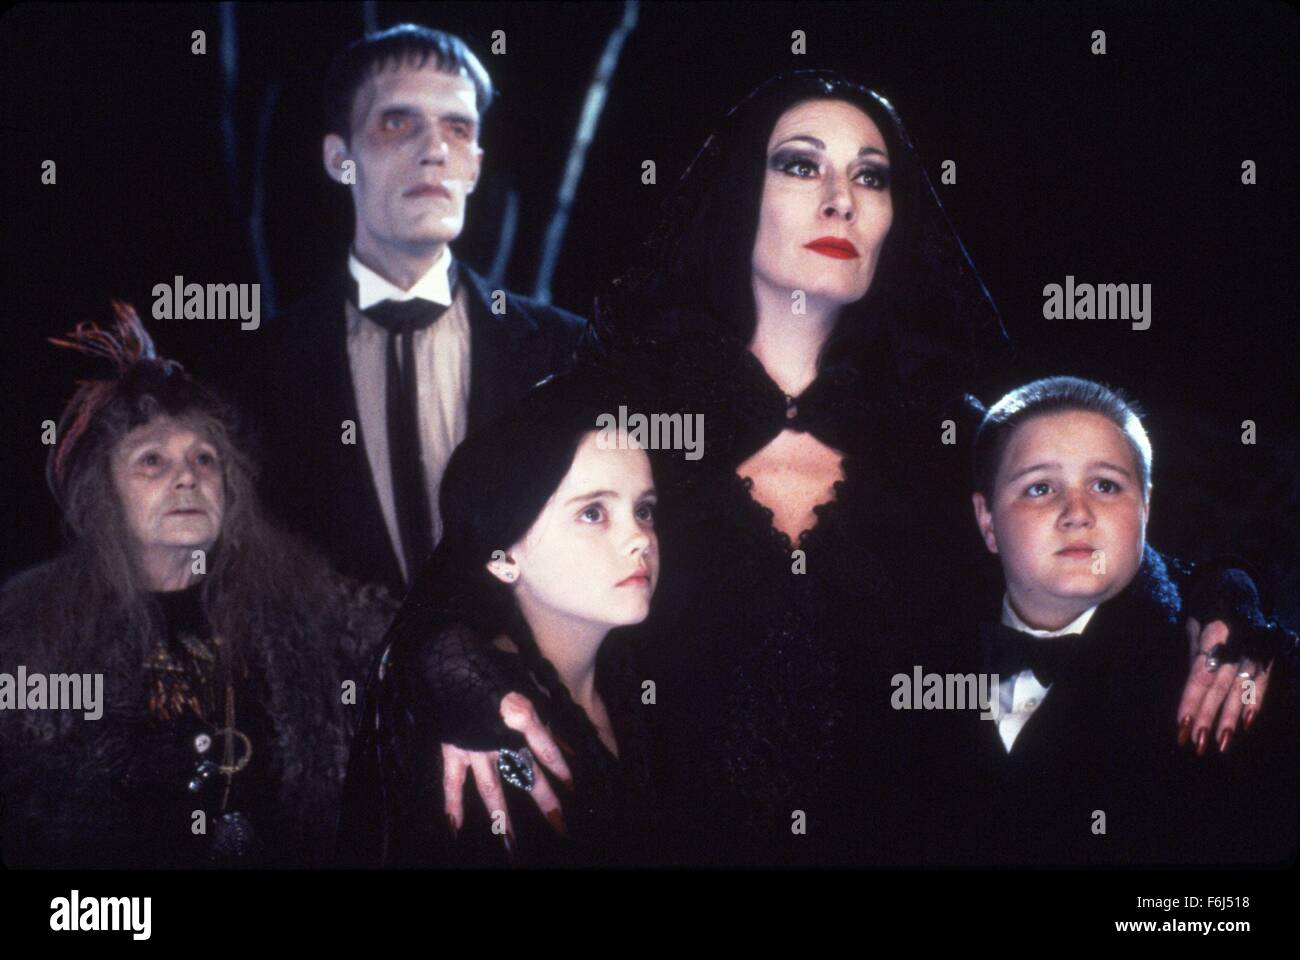 1991, Film Title: ADDAMS FAMILY, Director: BARRY SONNENFELD, Studio: ORION, Pictured: ENSEMBLE, ANJELICA HUSTON, JUDITH MALINA, CHRISTINA RICCI, BARRY SONNENFELD, CAREL STRUYCKEN. (Credit Image: SNAP) Stock Photo